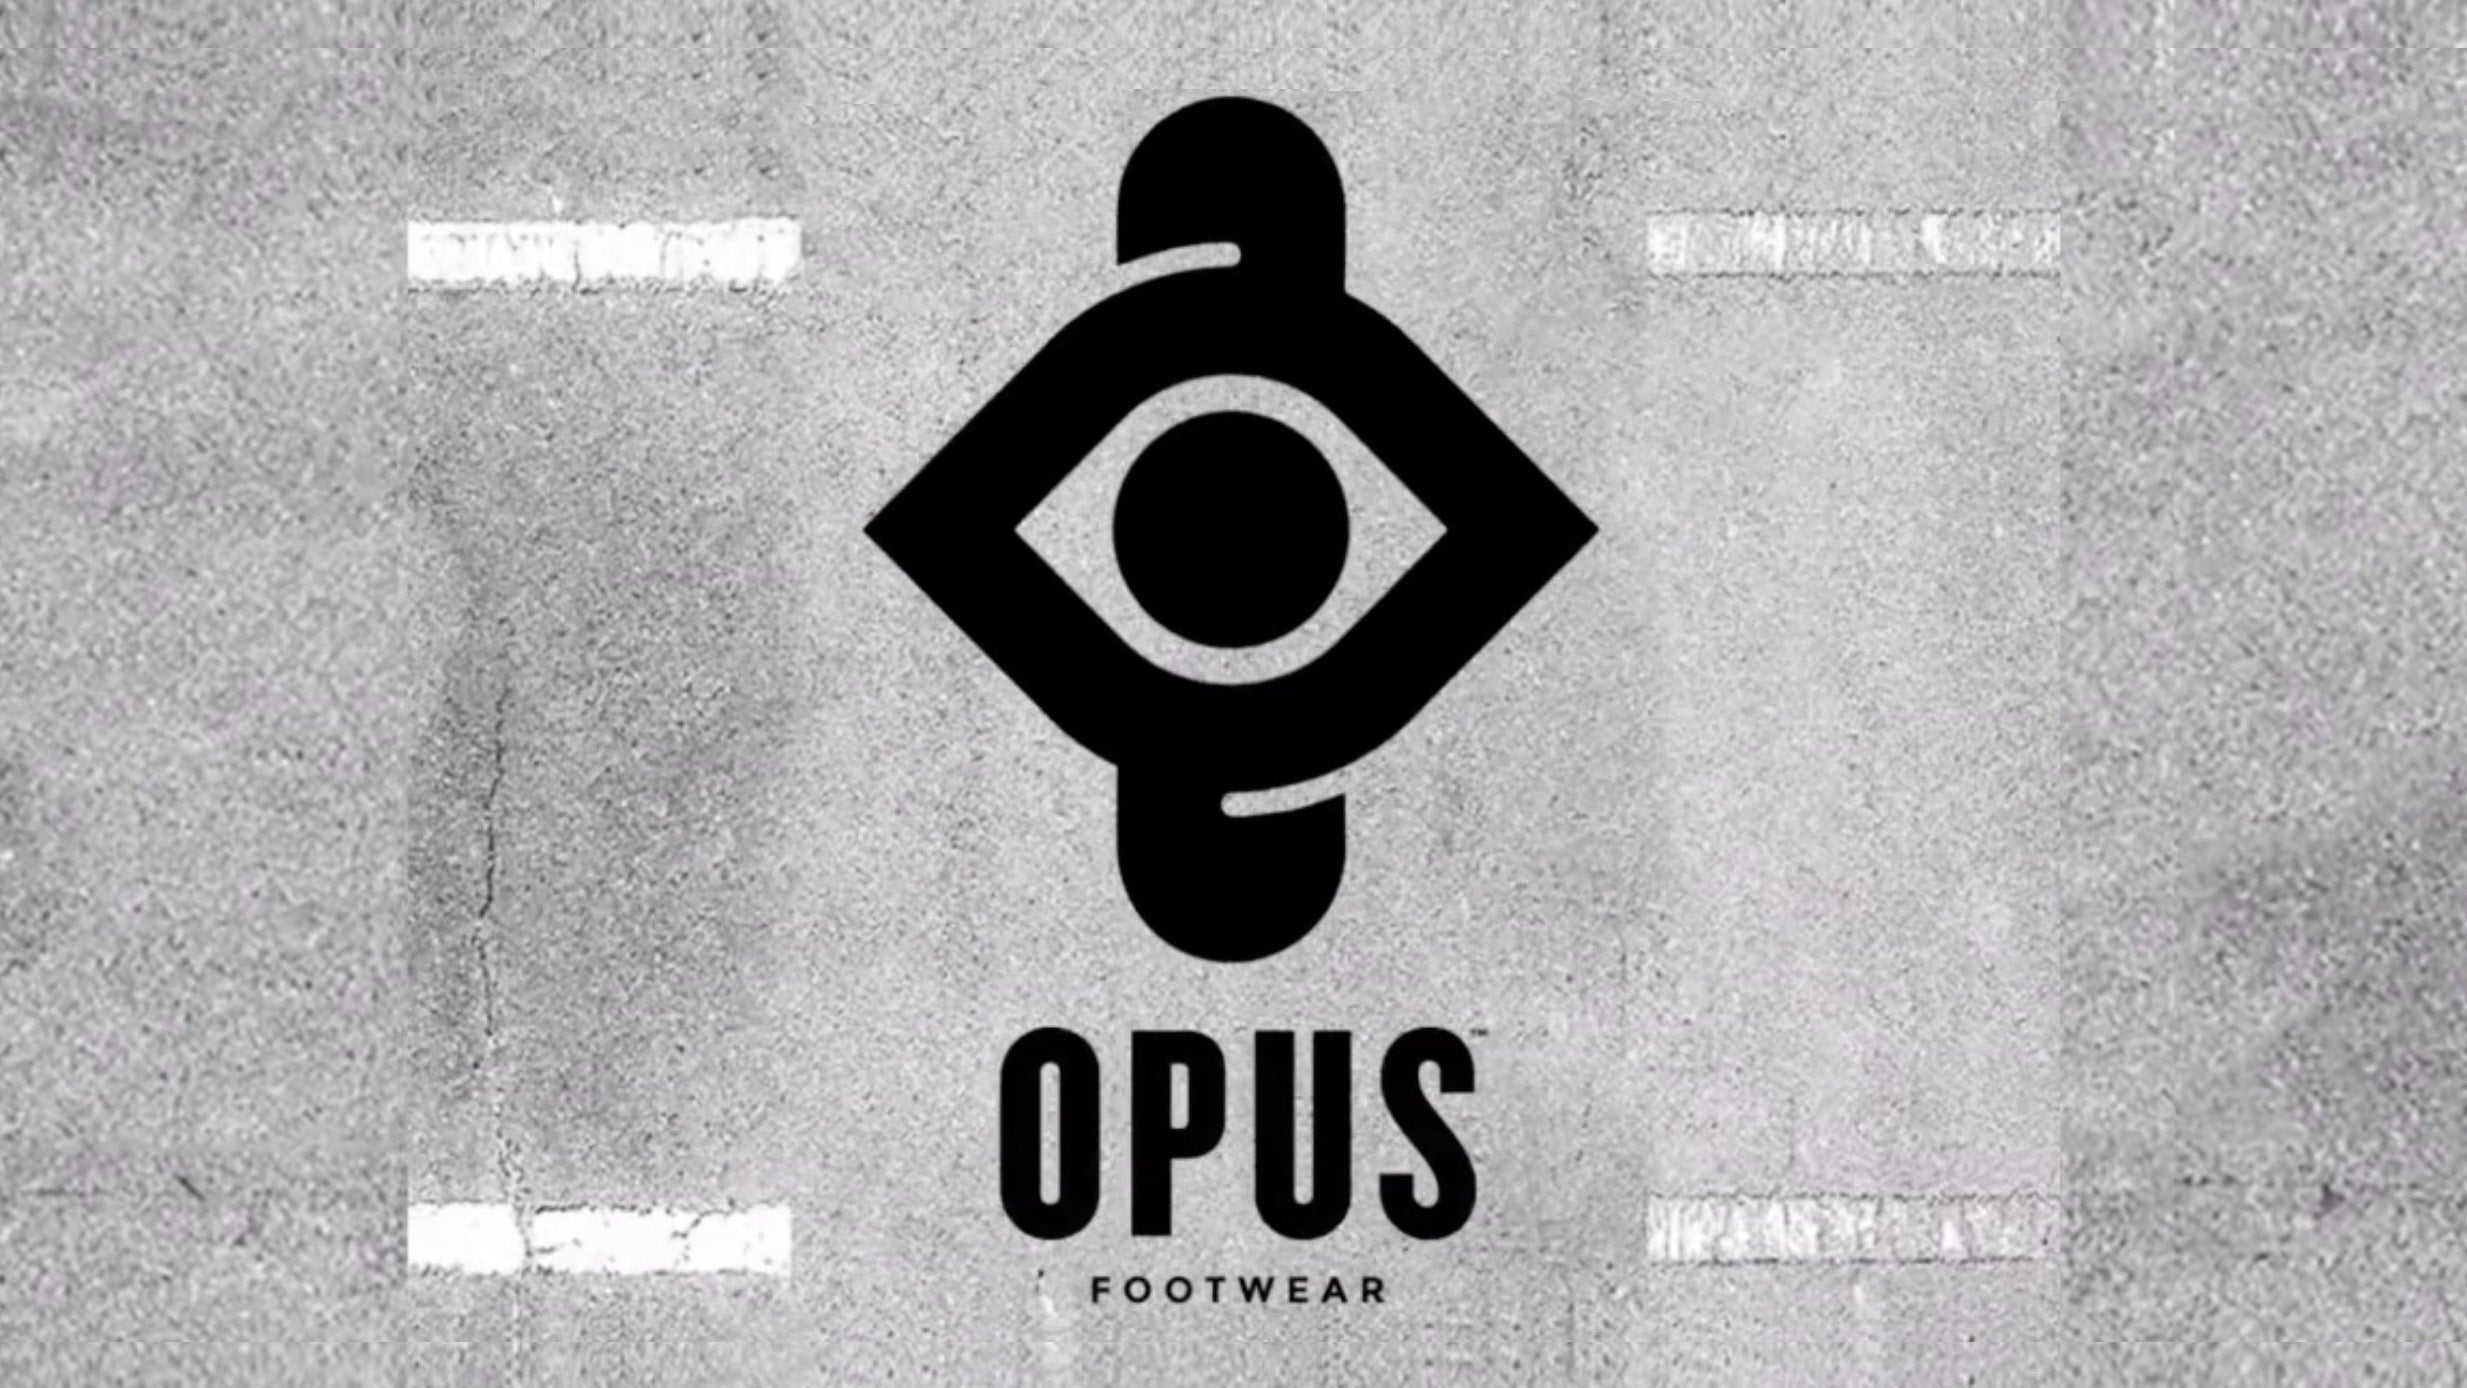 Load video: OPUS Footwear logo animation video